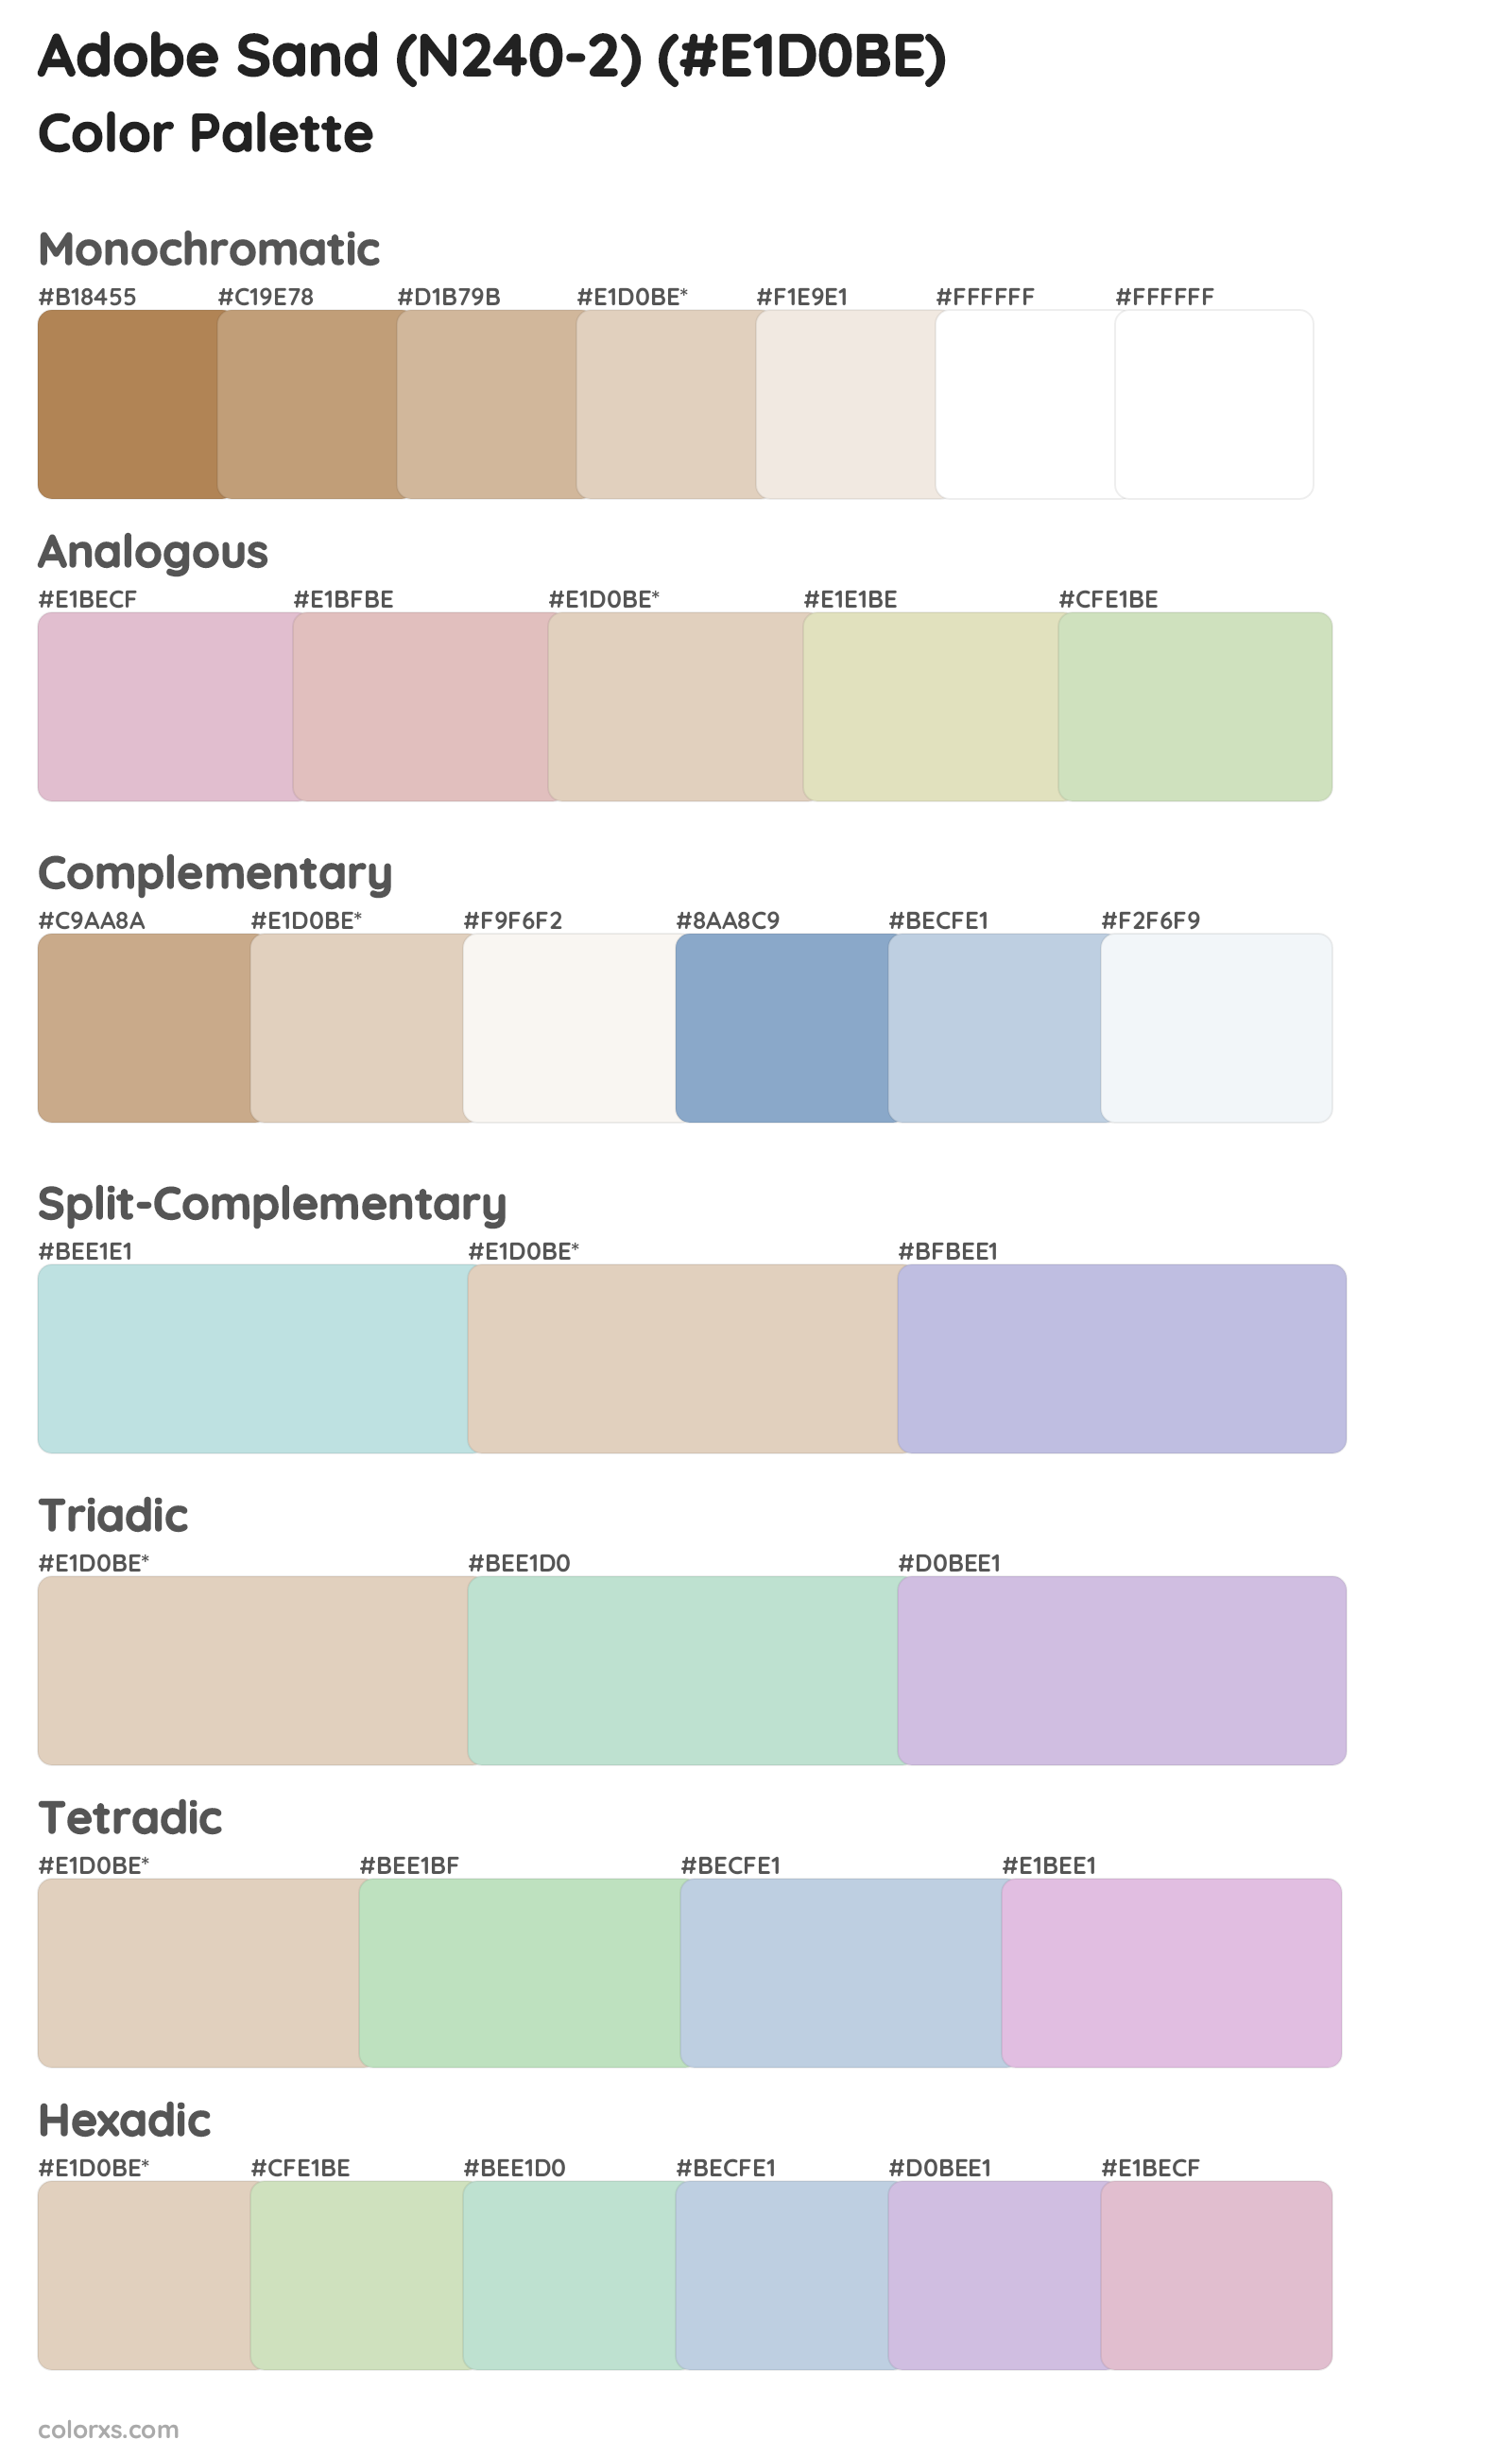 Adobe Sand (N240-2) Color Scheme Palettes